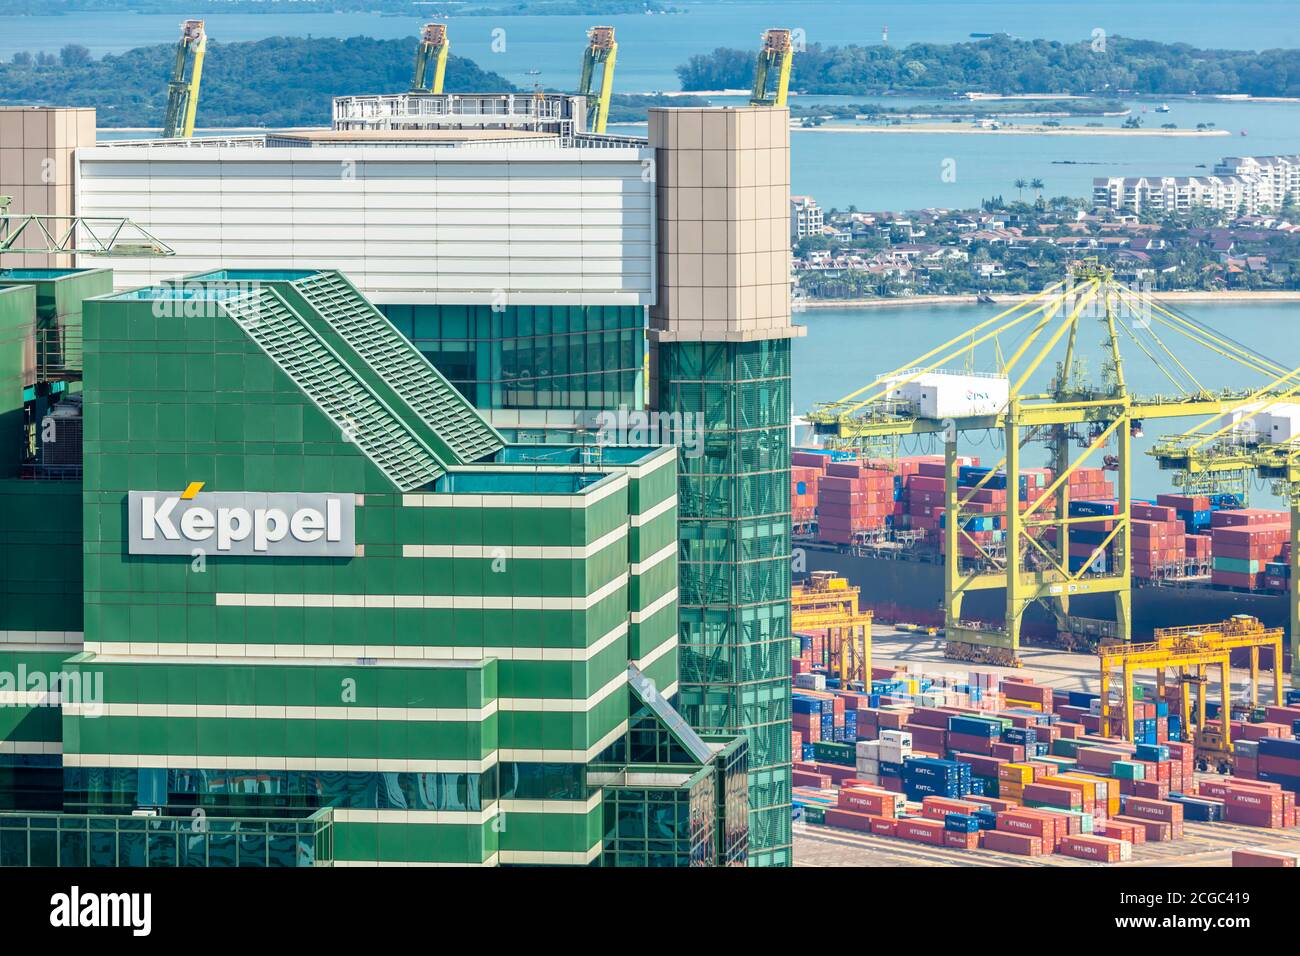 Keppel Towers, Singapore Stock Photo